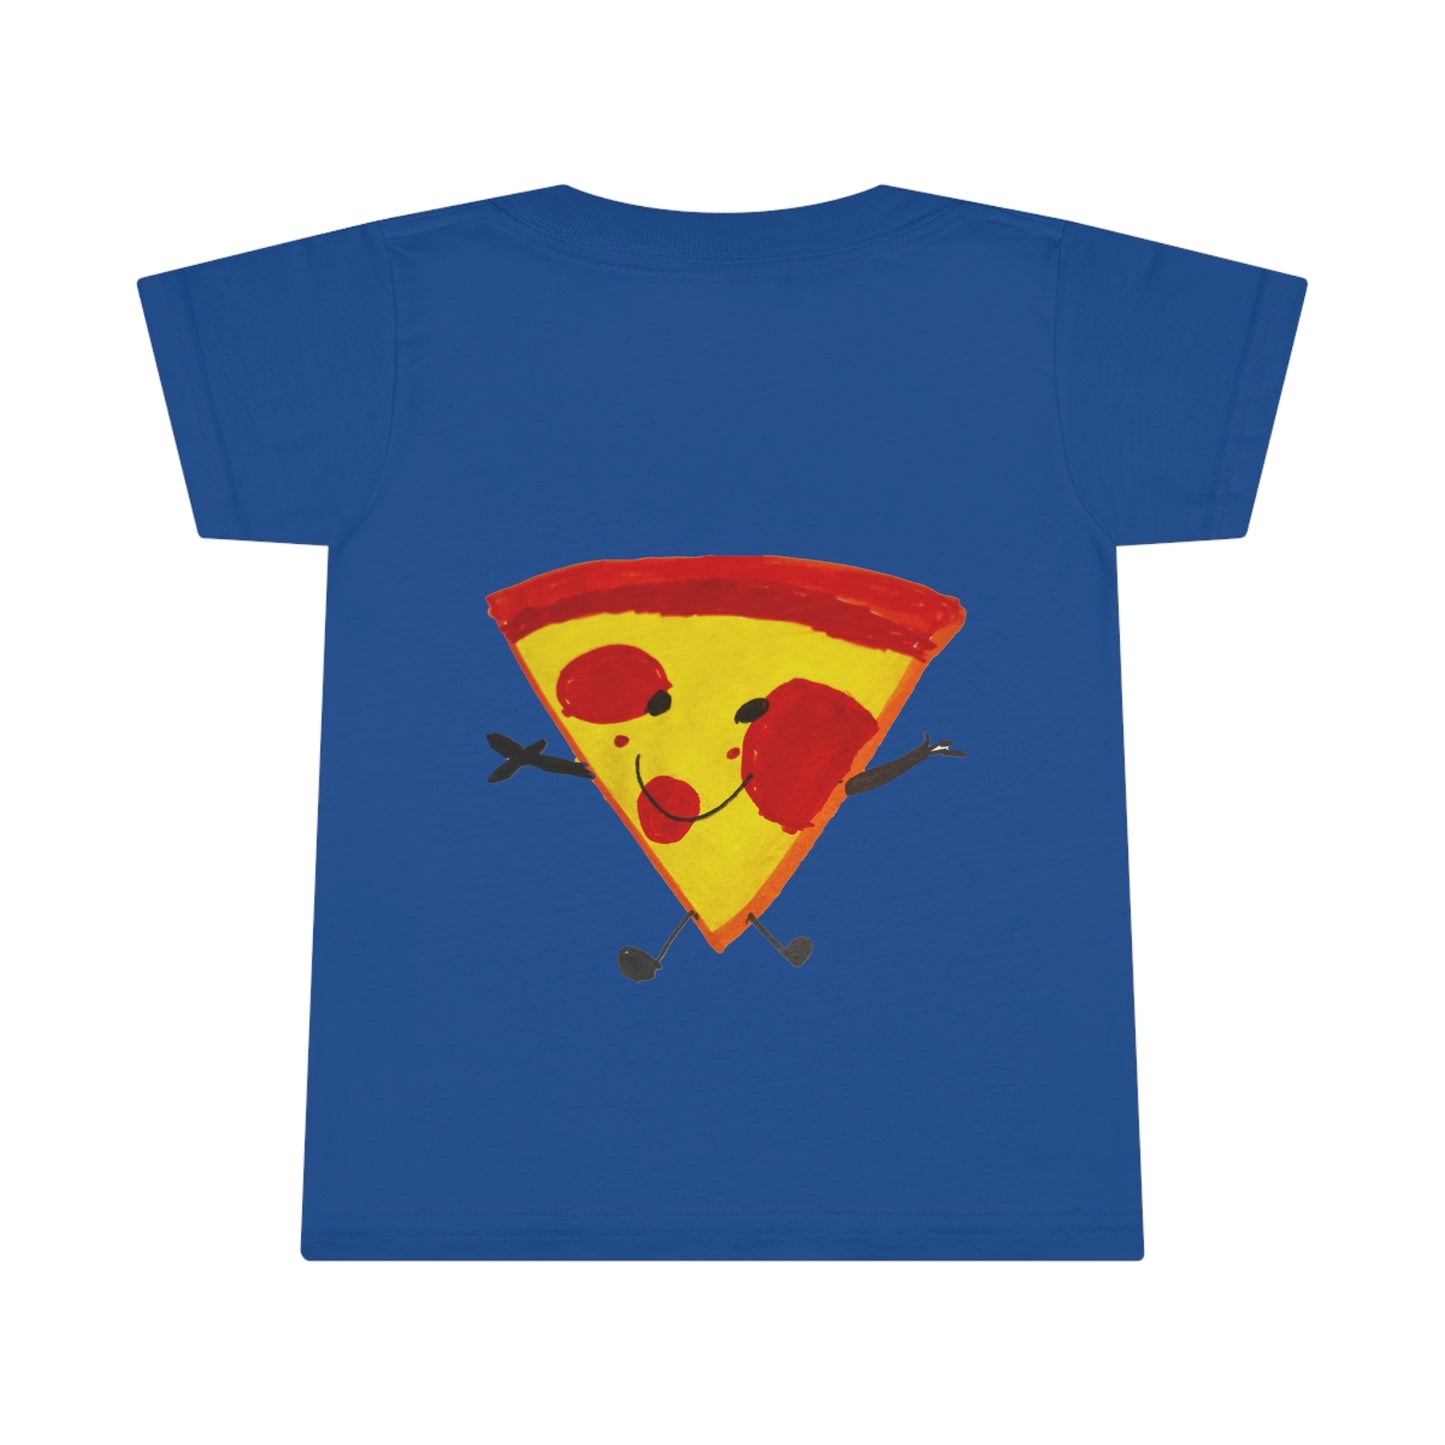 Pizza Cute & Soft Toddler T-shirt 2T - 6T